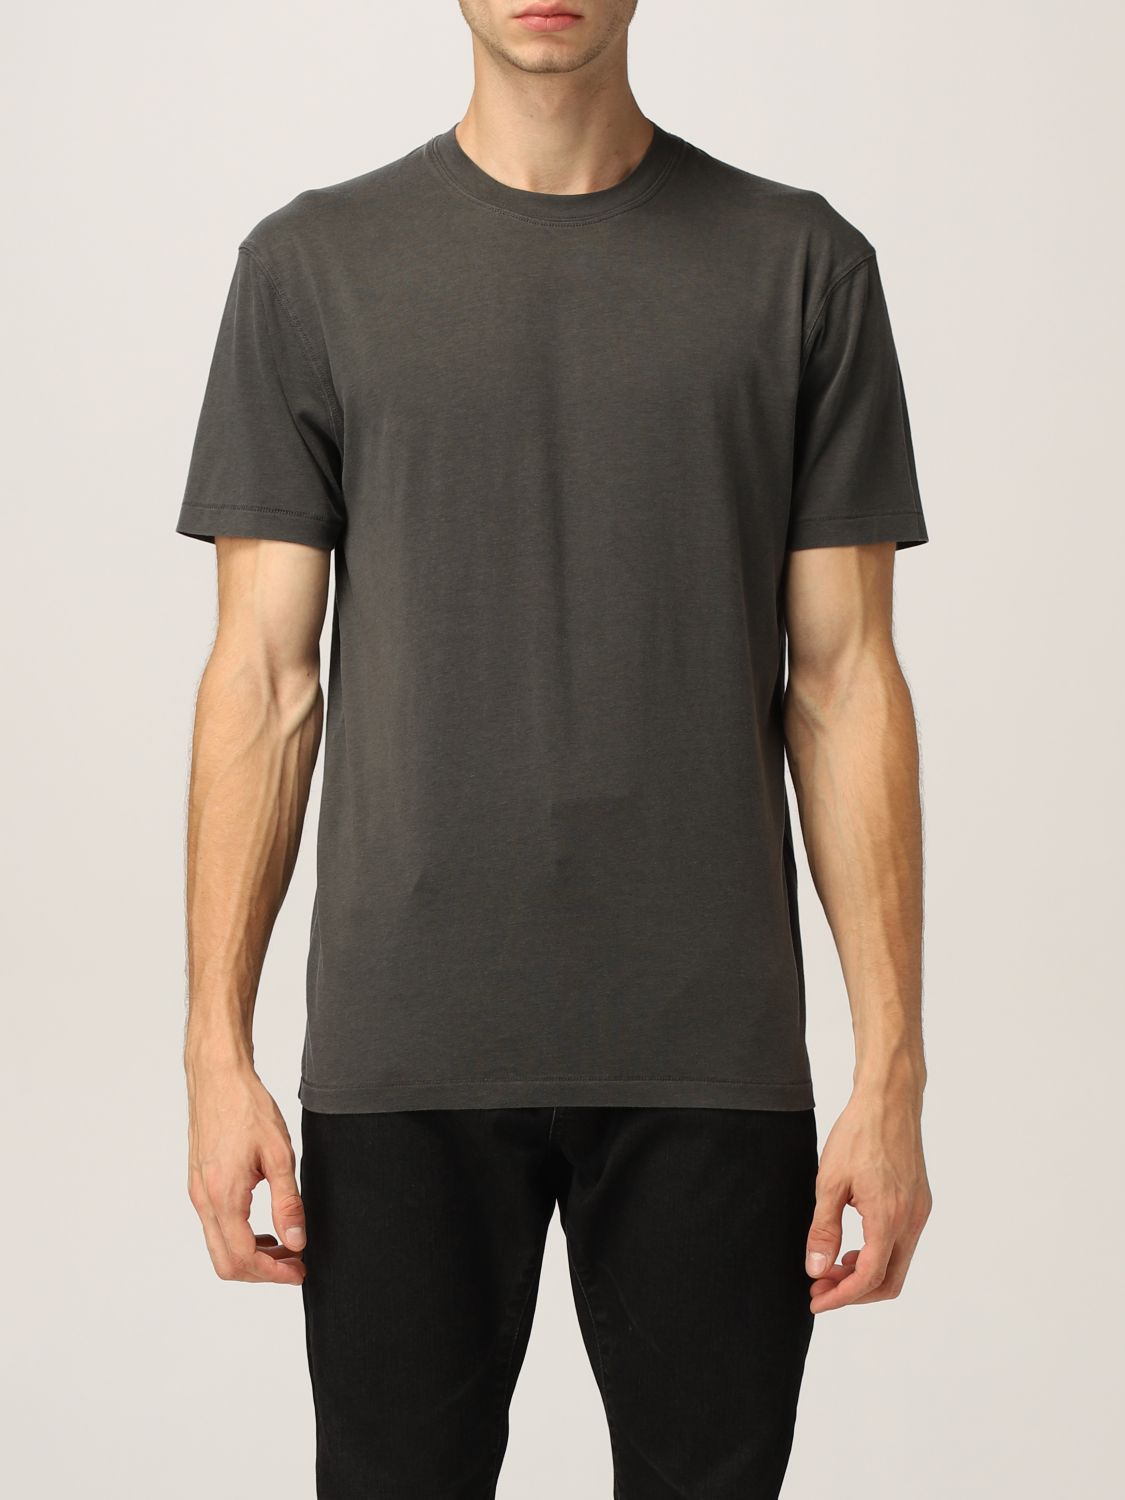 TOM FORD: t-shirt for man - Kaki | Tom Ford t-shirt TFJ950BY229 online on  